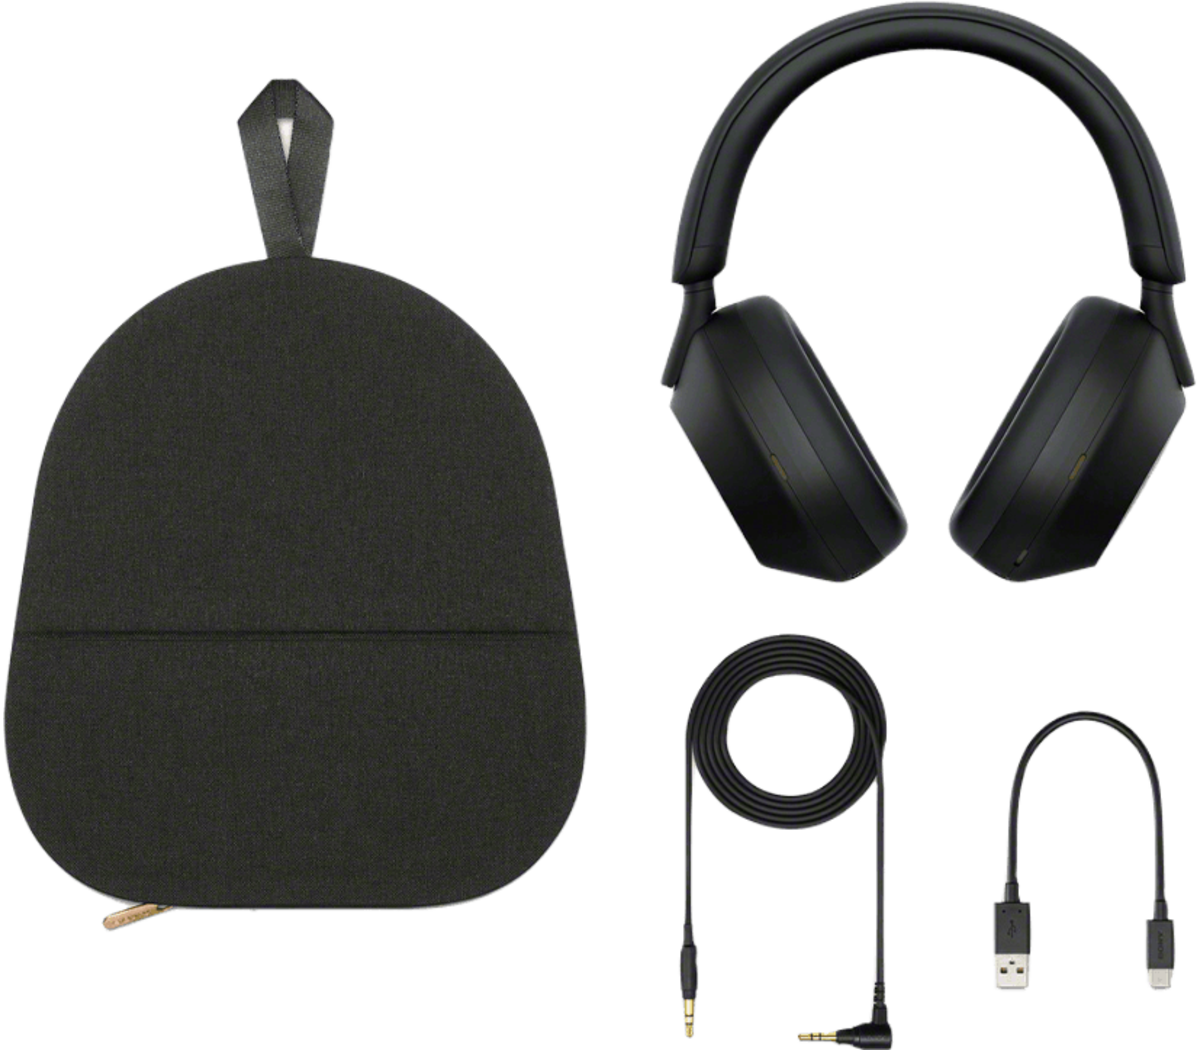 MDR-Z7M2 Headphones, Extreme Comfort & High-Res Audio